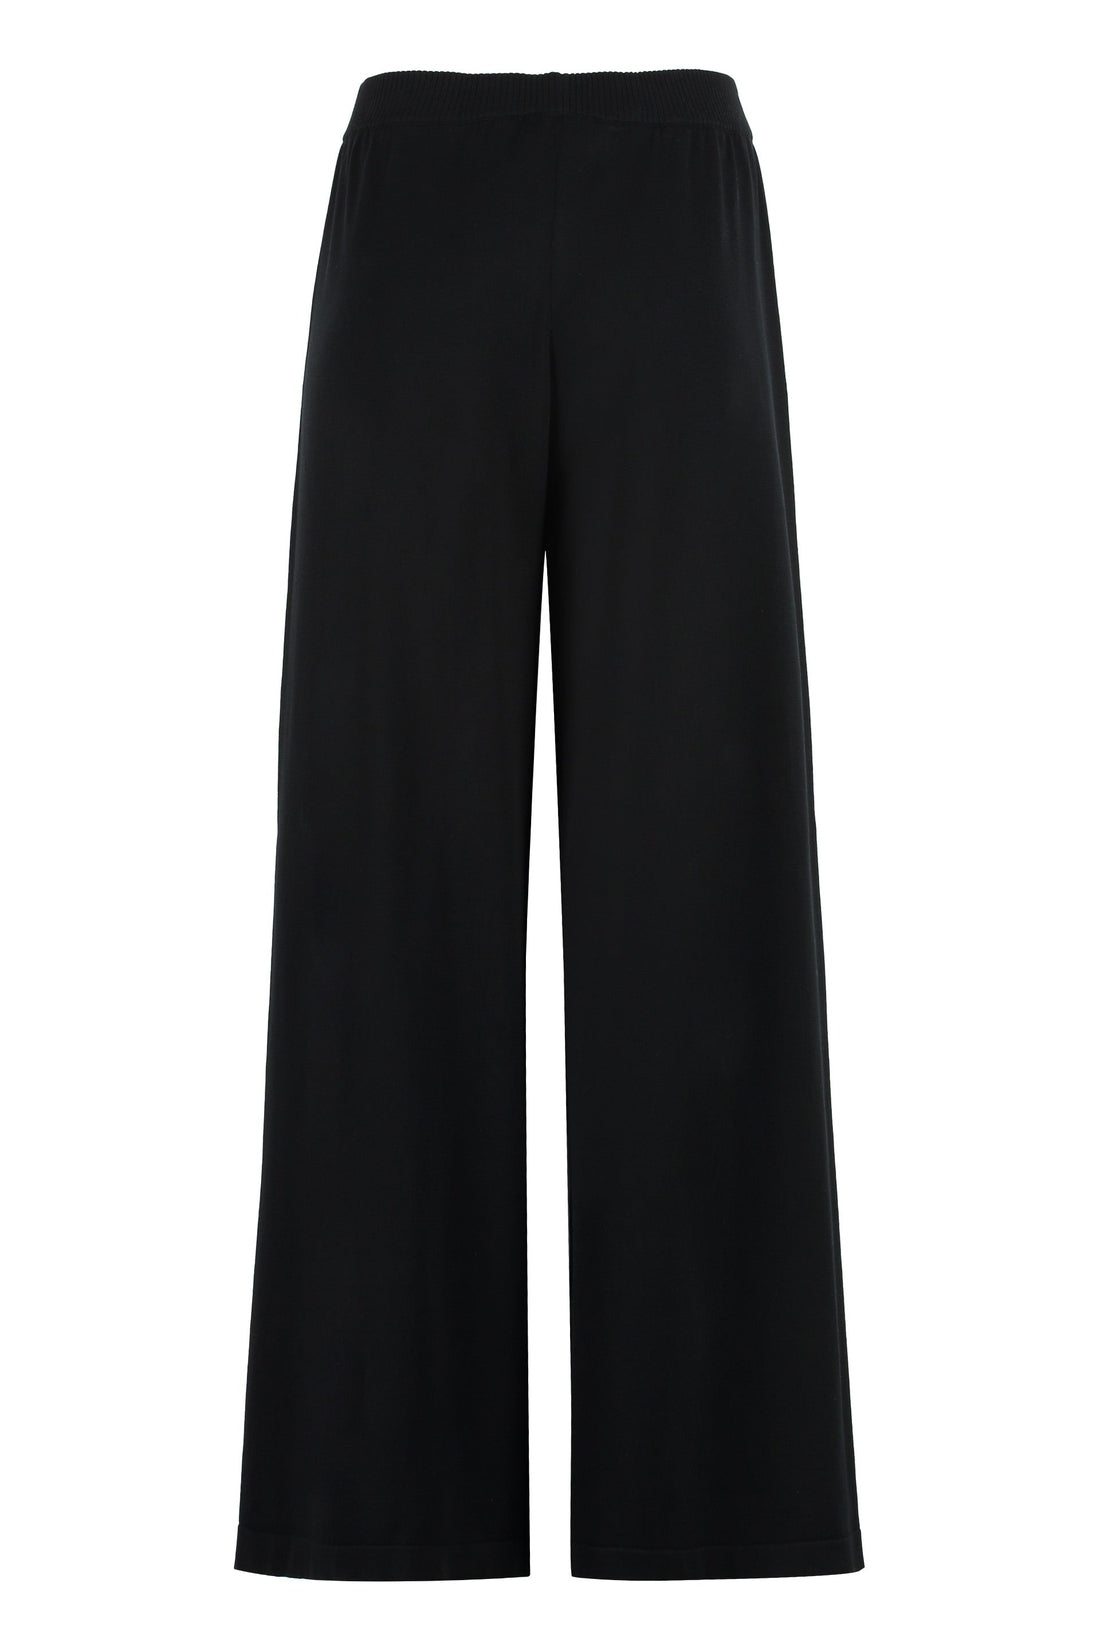 Fabiana Filippi-OUTLET-SALE-High-rise cotton trousers-ARCHIVIST